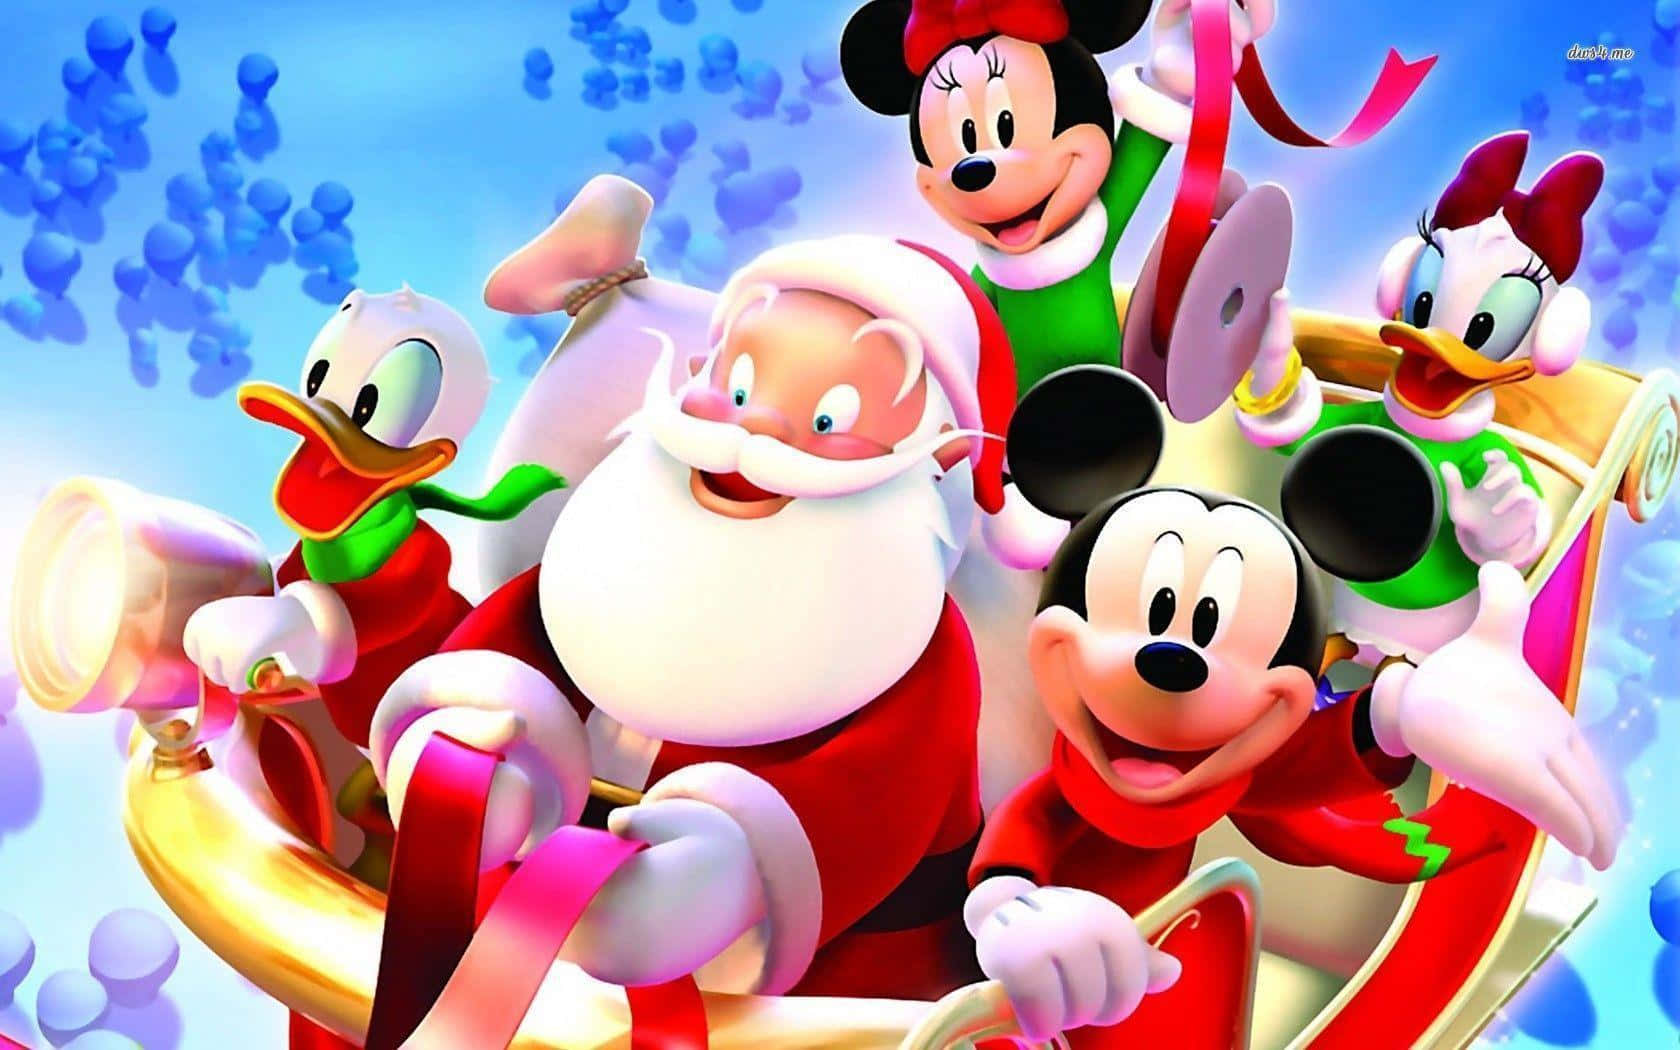 Fejrmagien I Disney Denne Jul.